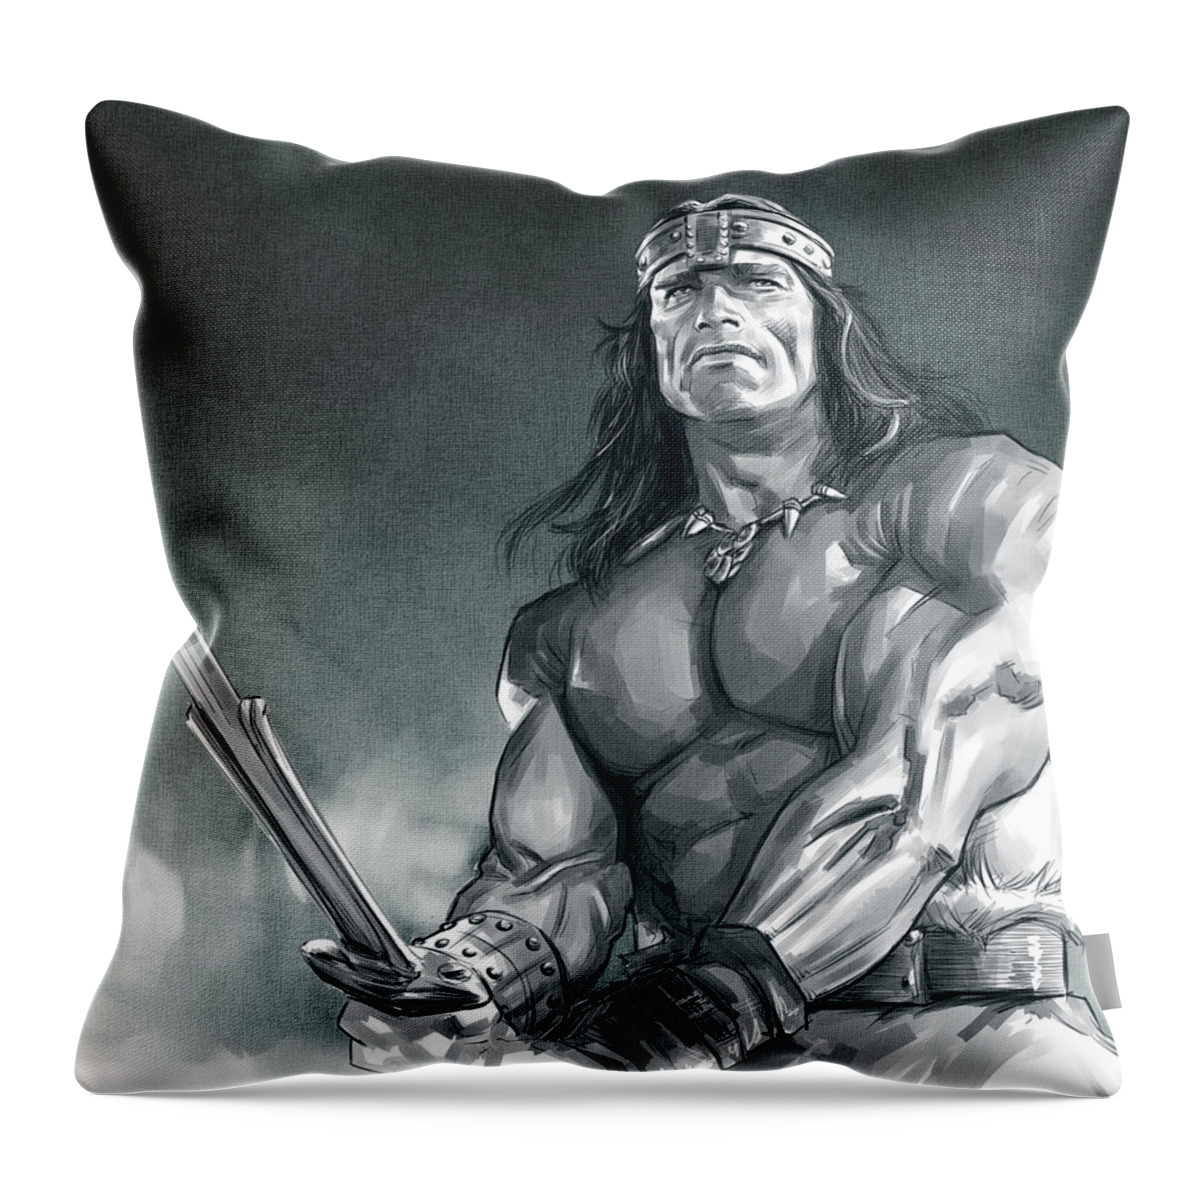 Conan The Barbarian Throw Pillow featuring the digital art Conan The Barbarian by Darko B